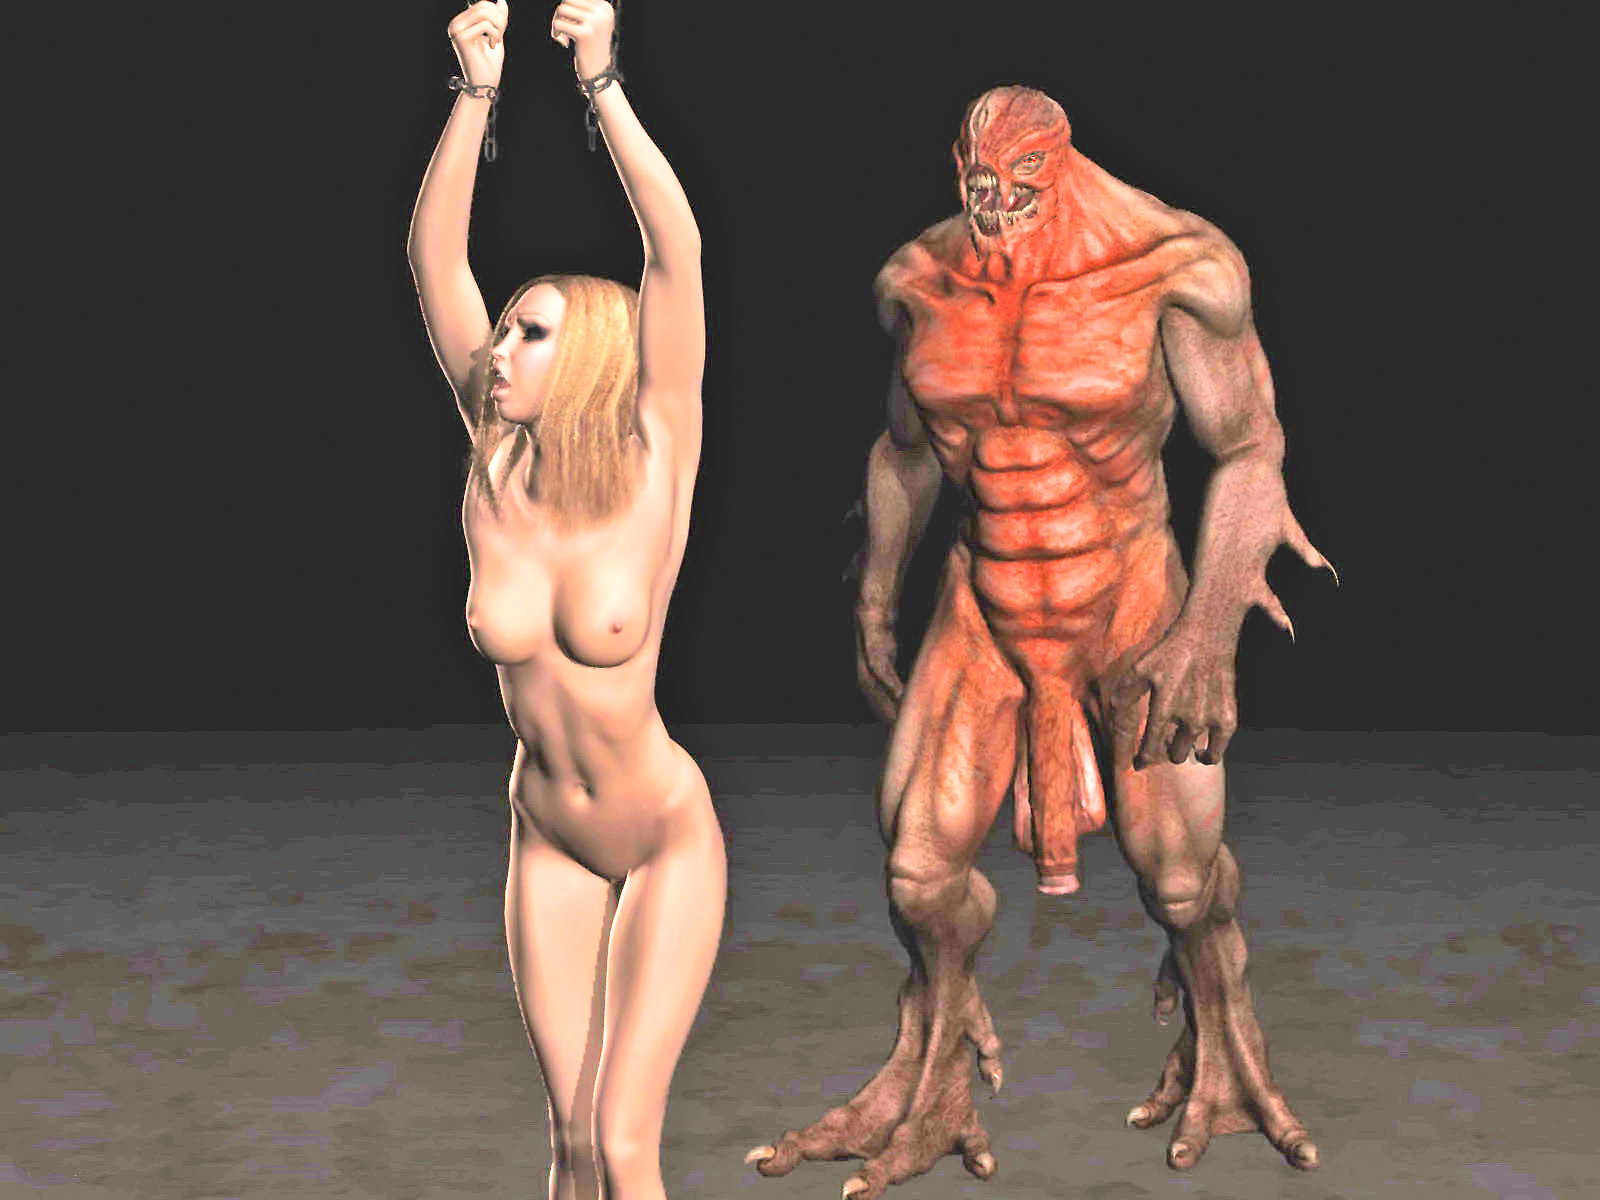 Erotic 3d Art - Demons and ogres ravaging babes - erotic 3d art monster at  Hd3dMonsterSex.com